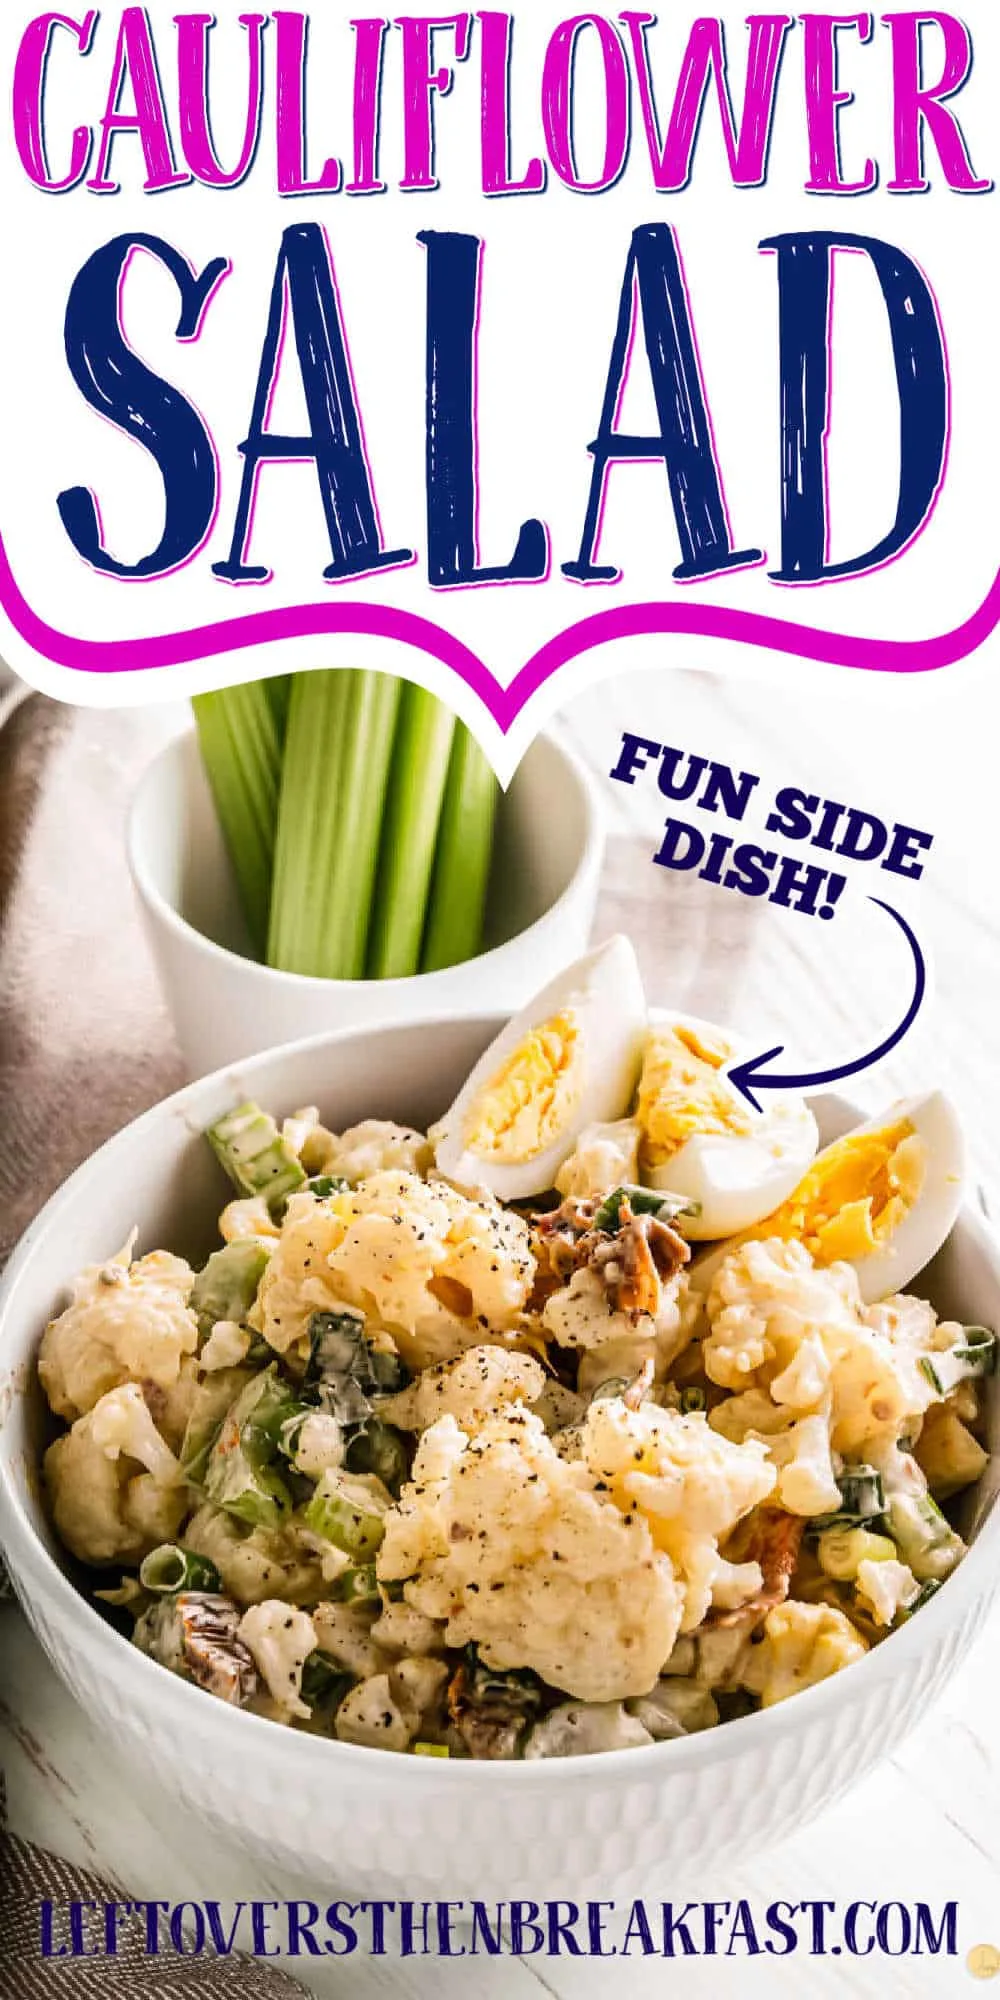 salad with text "cauliflower salad"